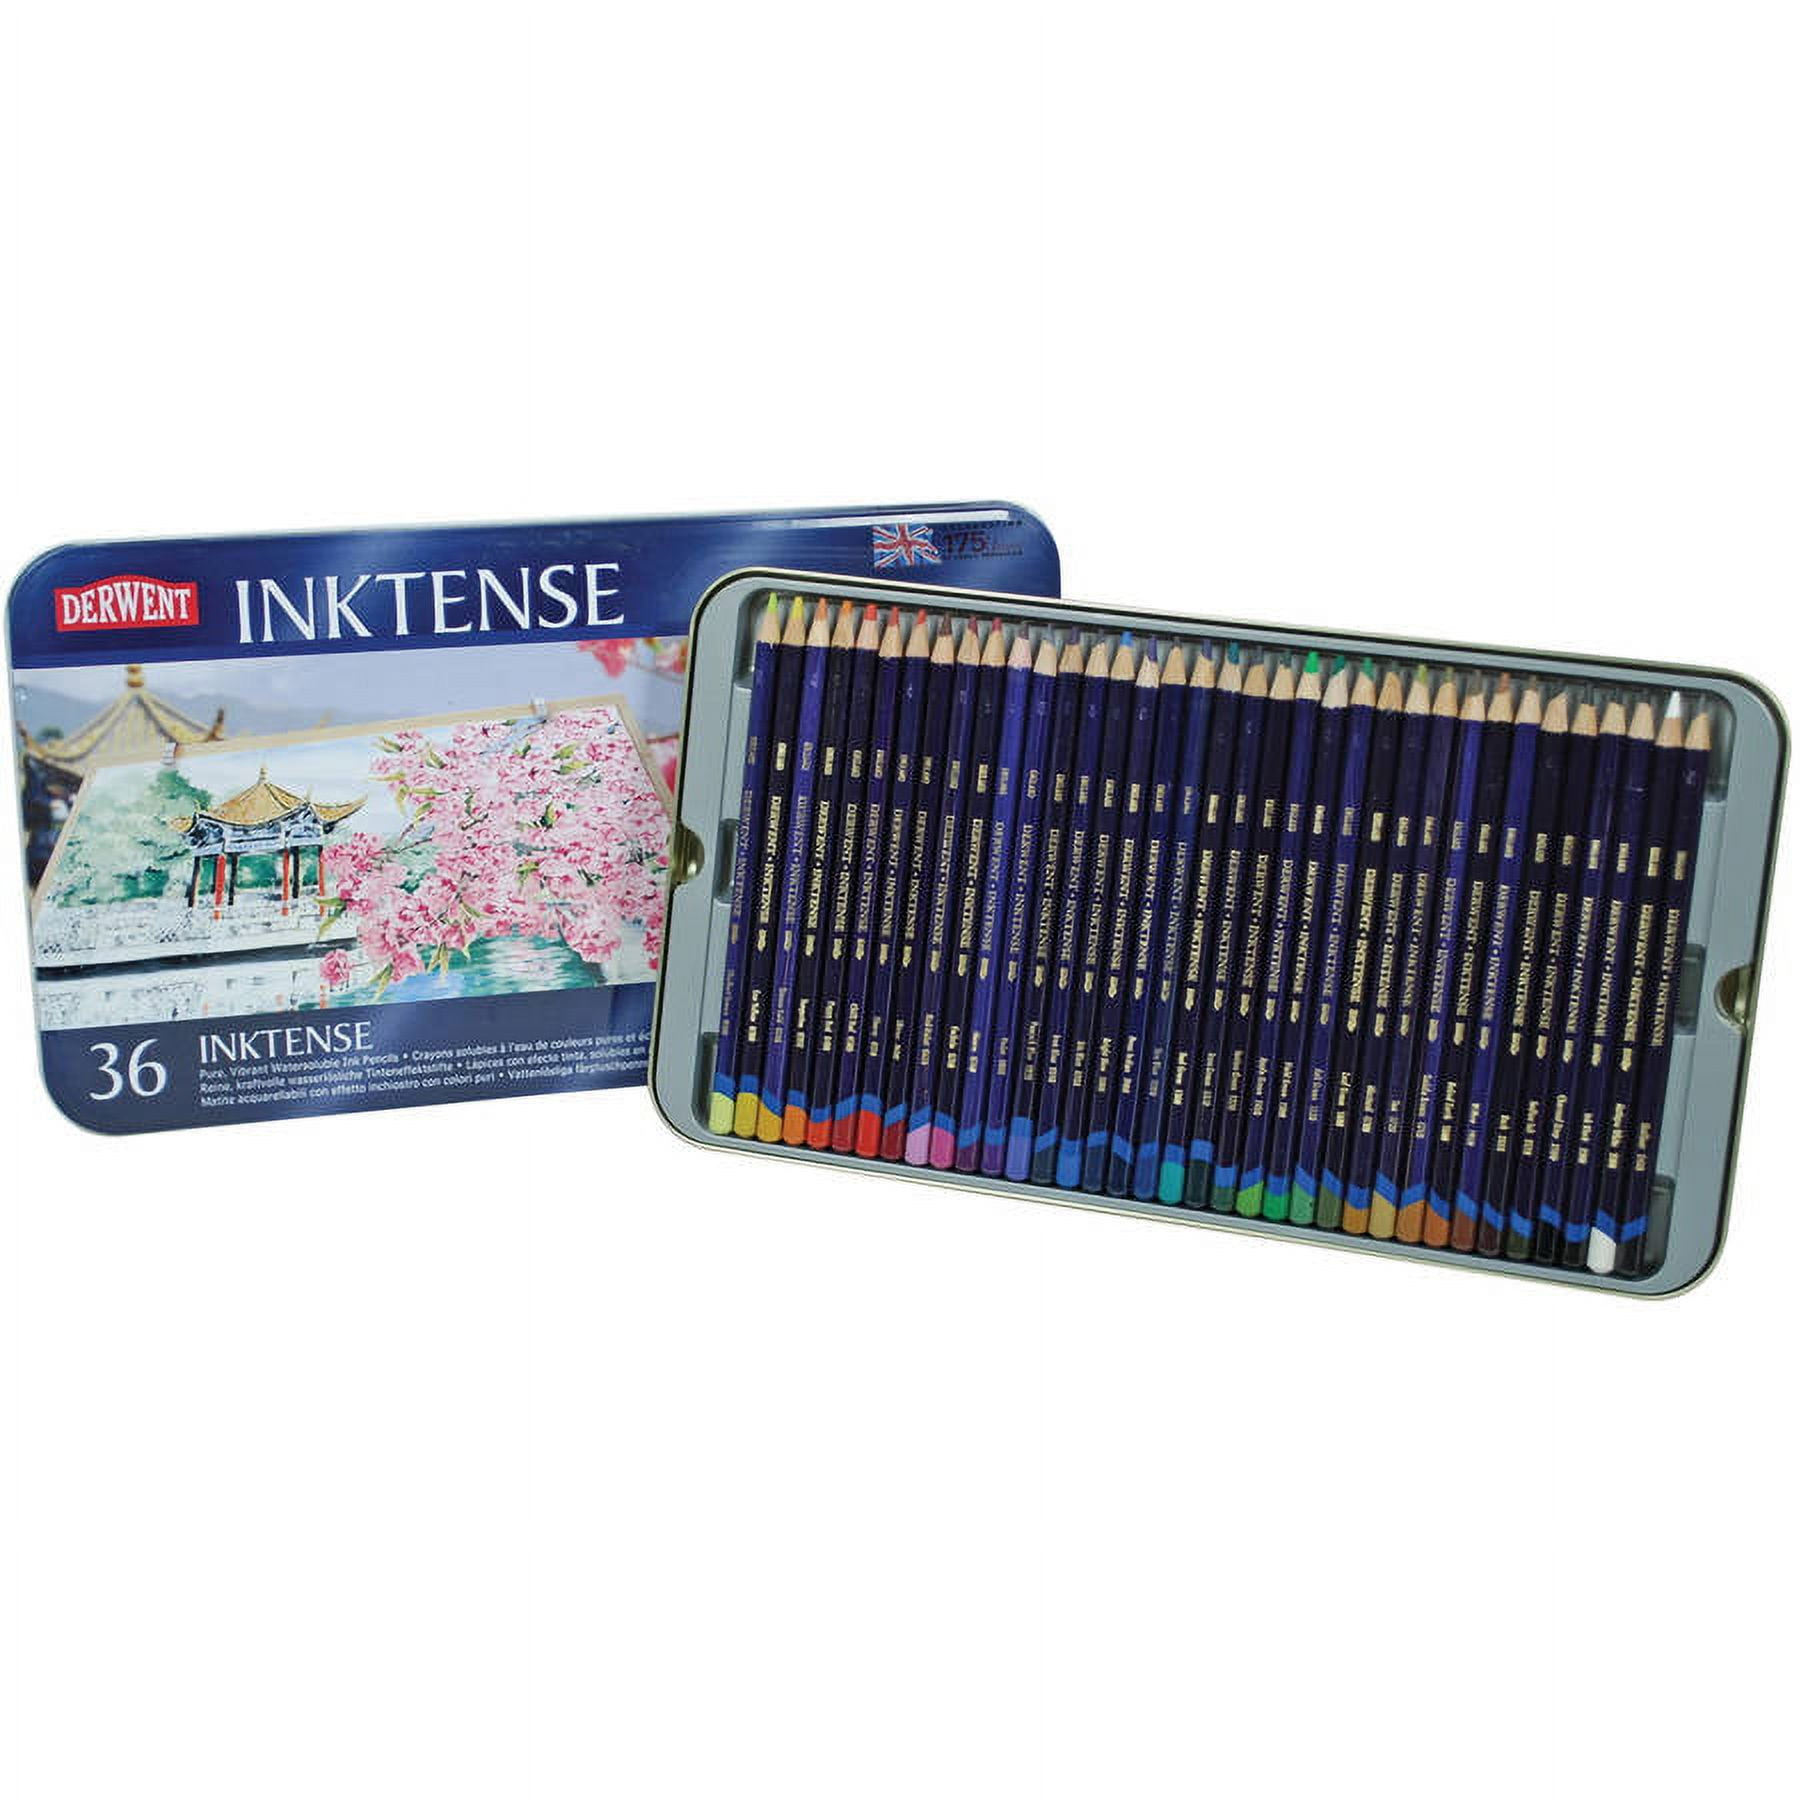 Derwent Inktense Set of 6 Pencils - The Art Store/Commercial Art Supply